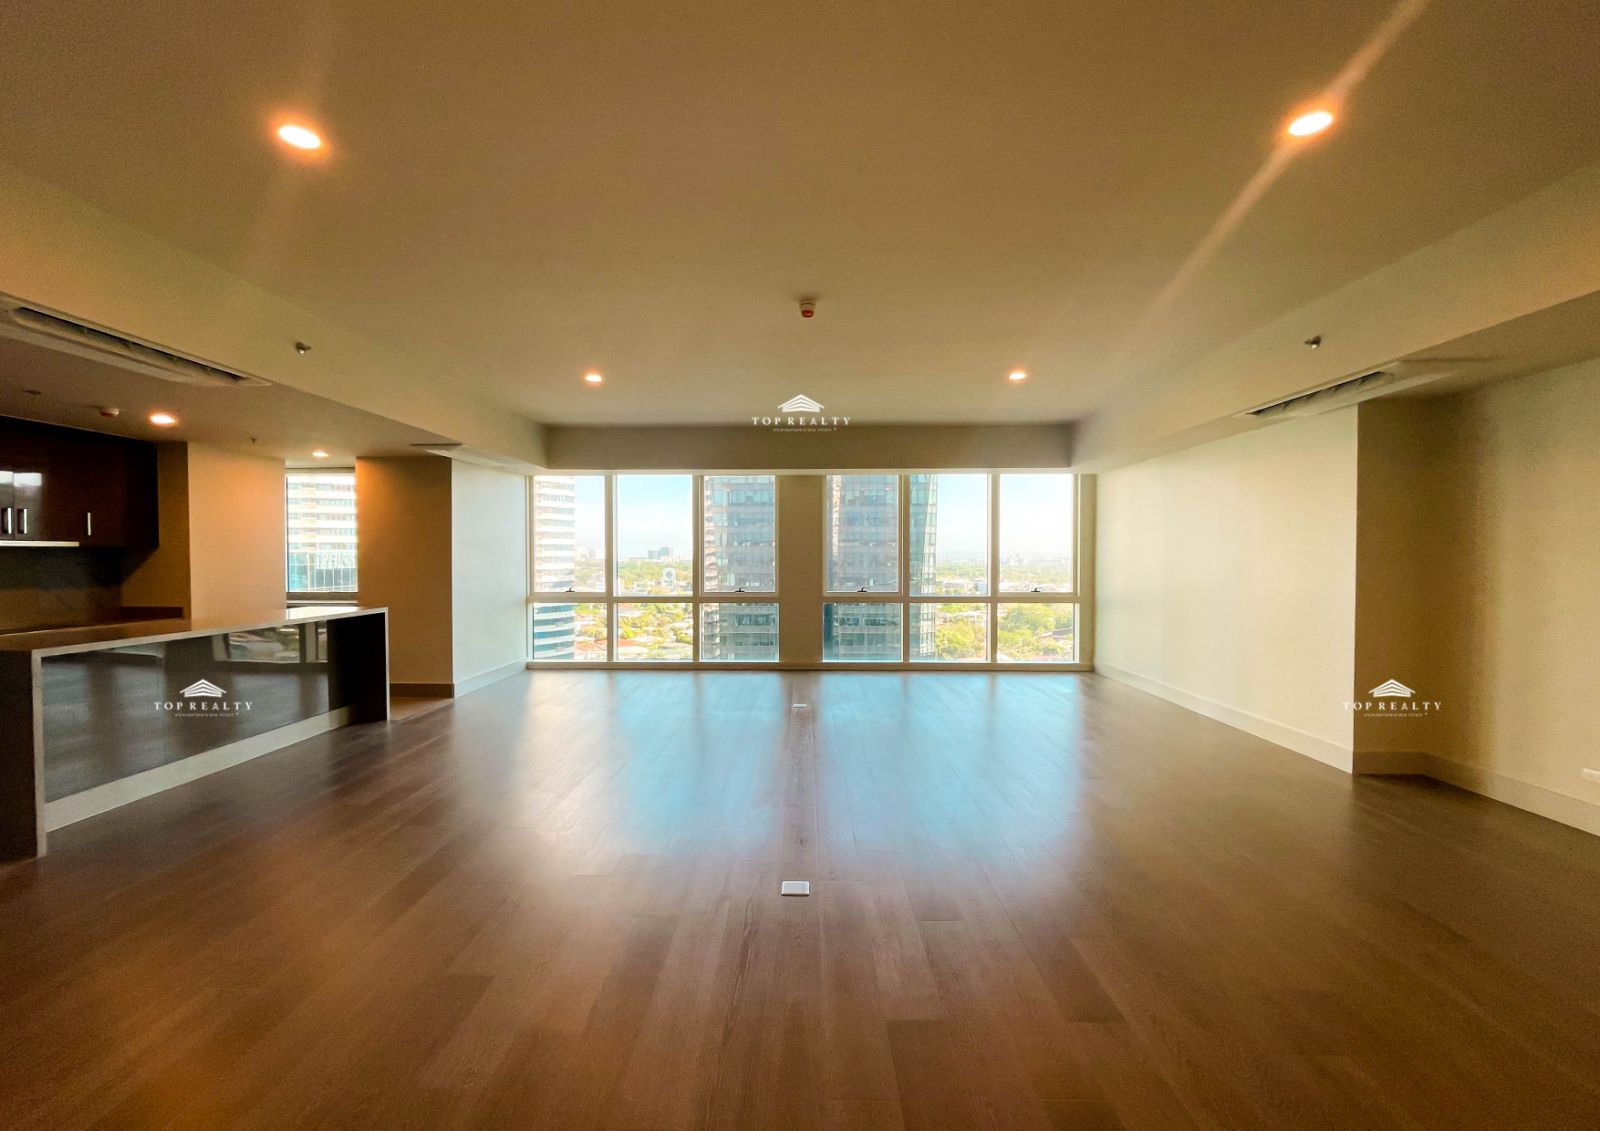 For Rent: Rare 3Bedroom Condominium in The Balmori Suites, Rockwell, Makati City